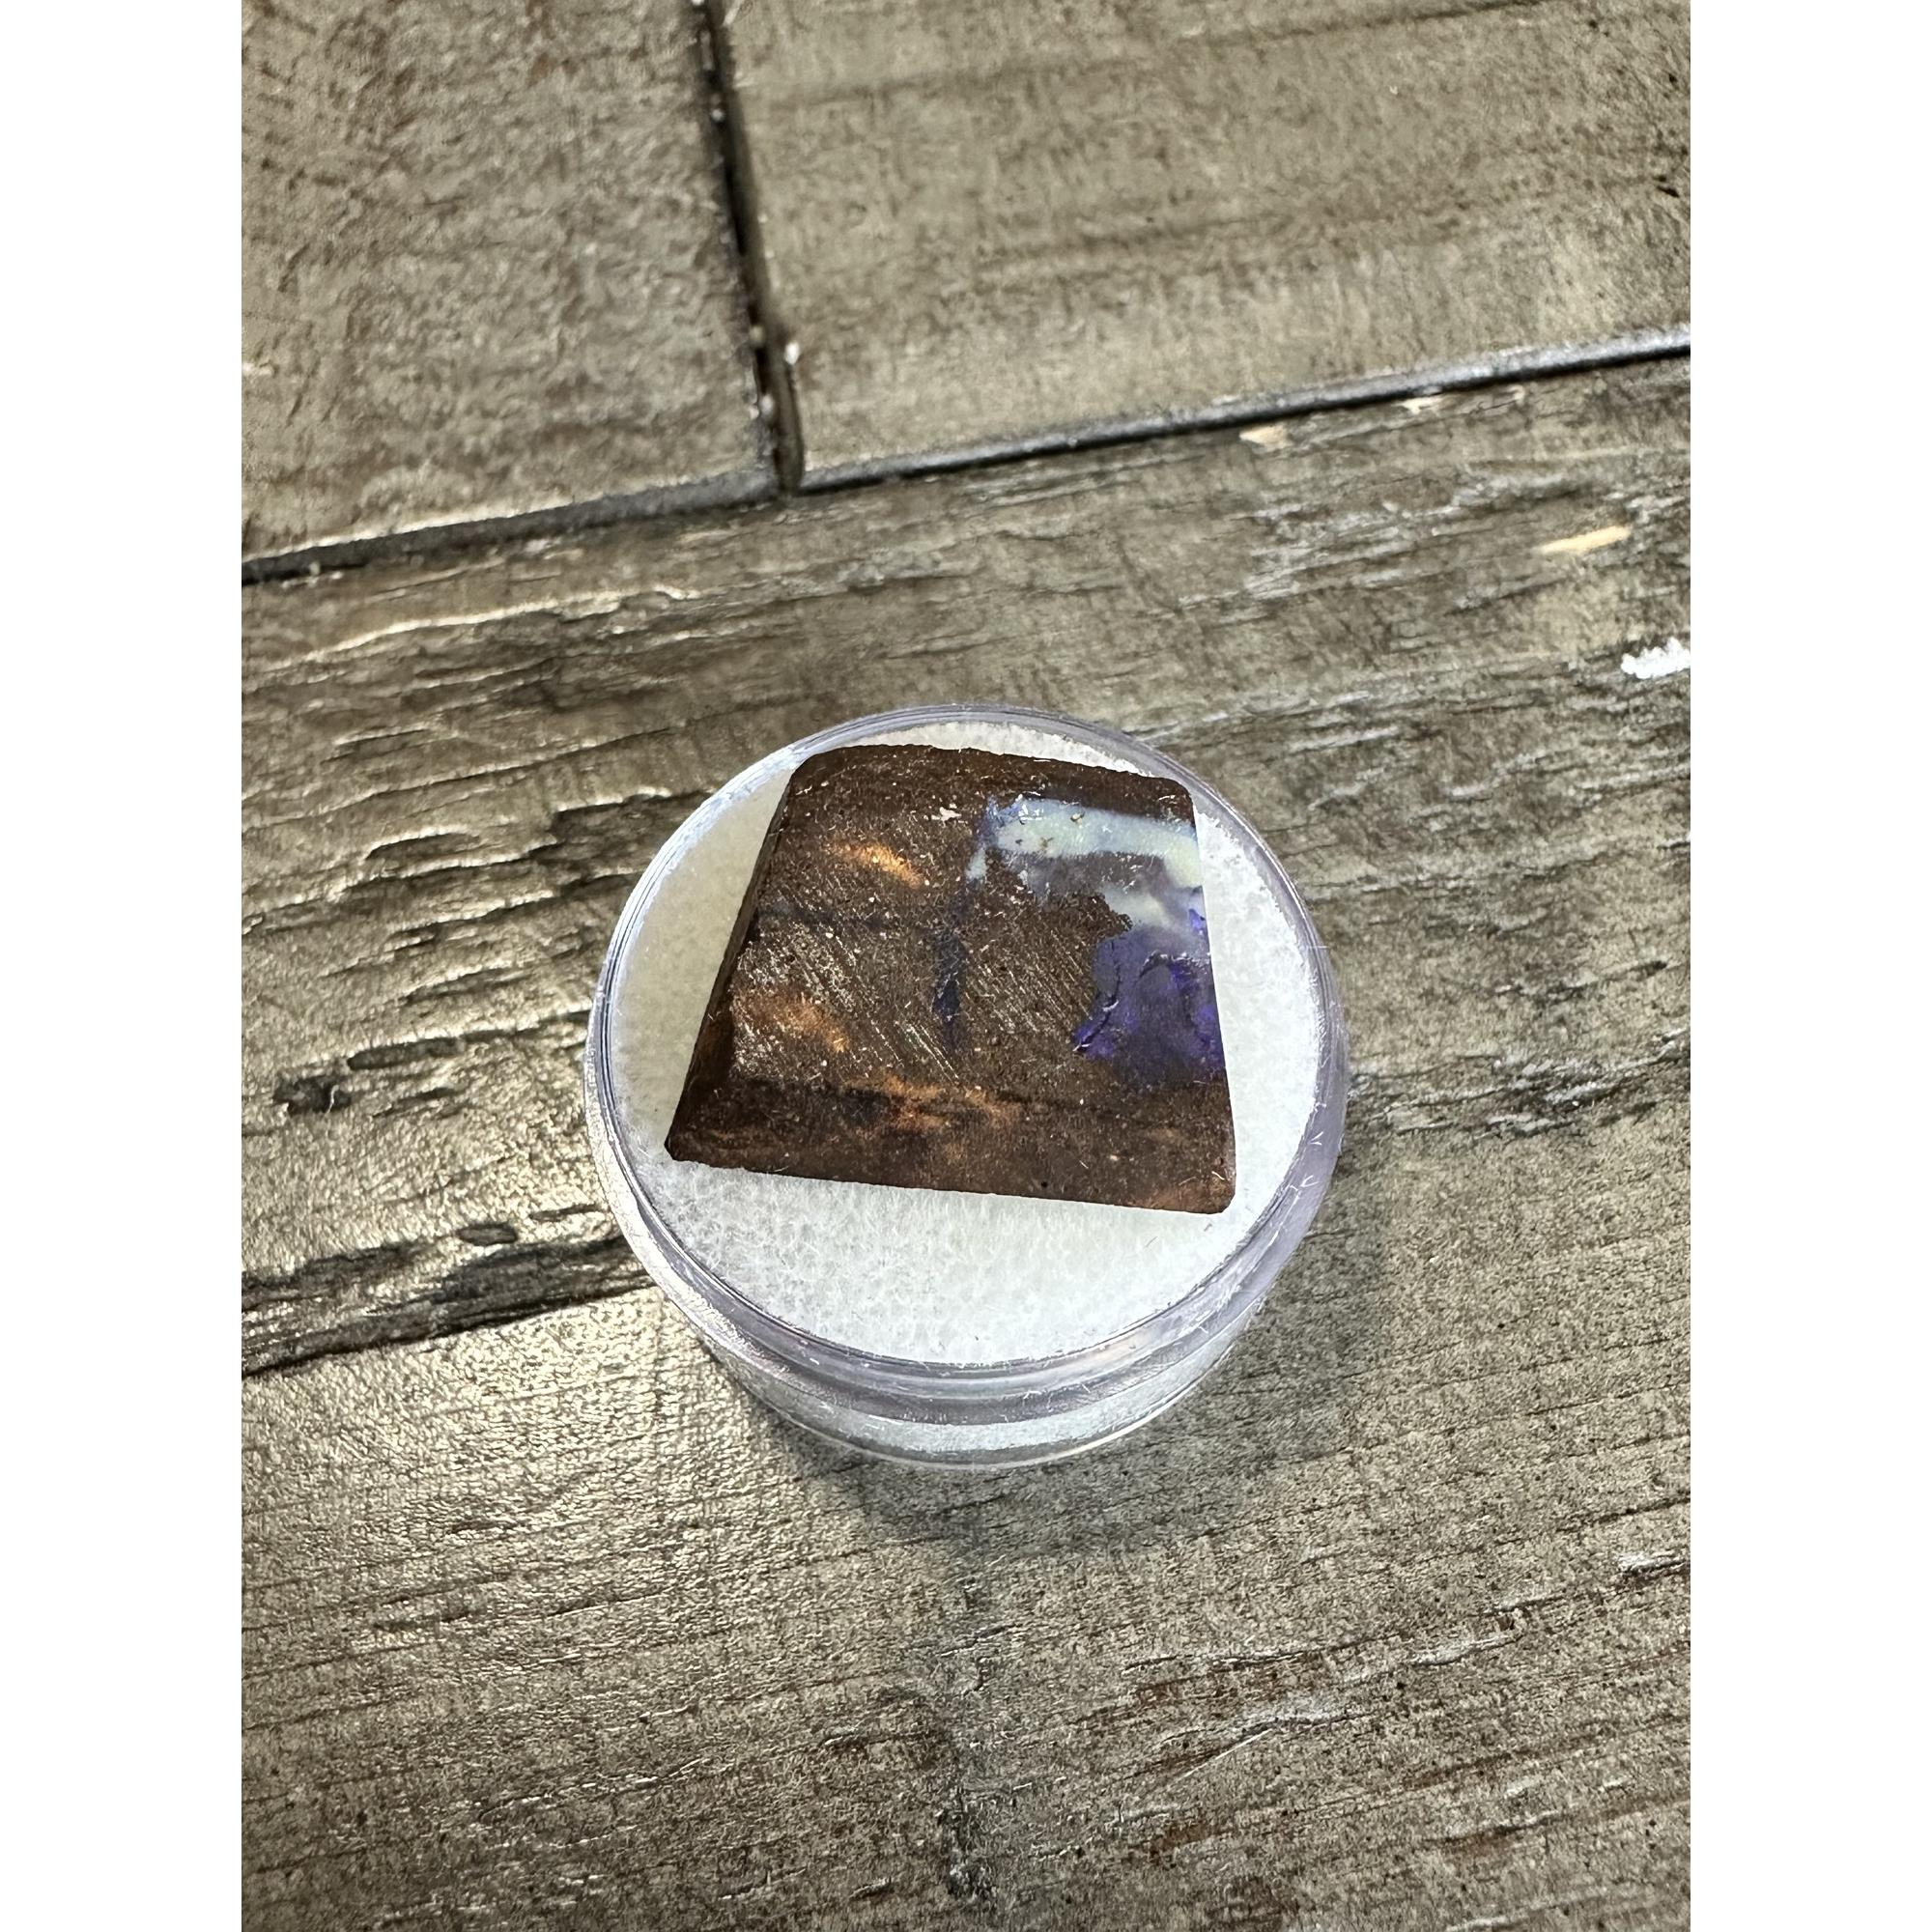 Opal, boulder, Australia, dark color matrix Prehistoric Online